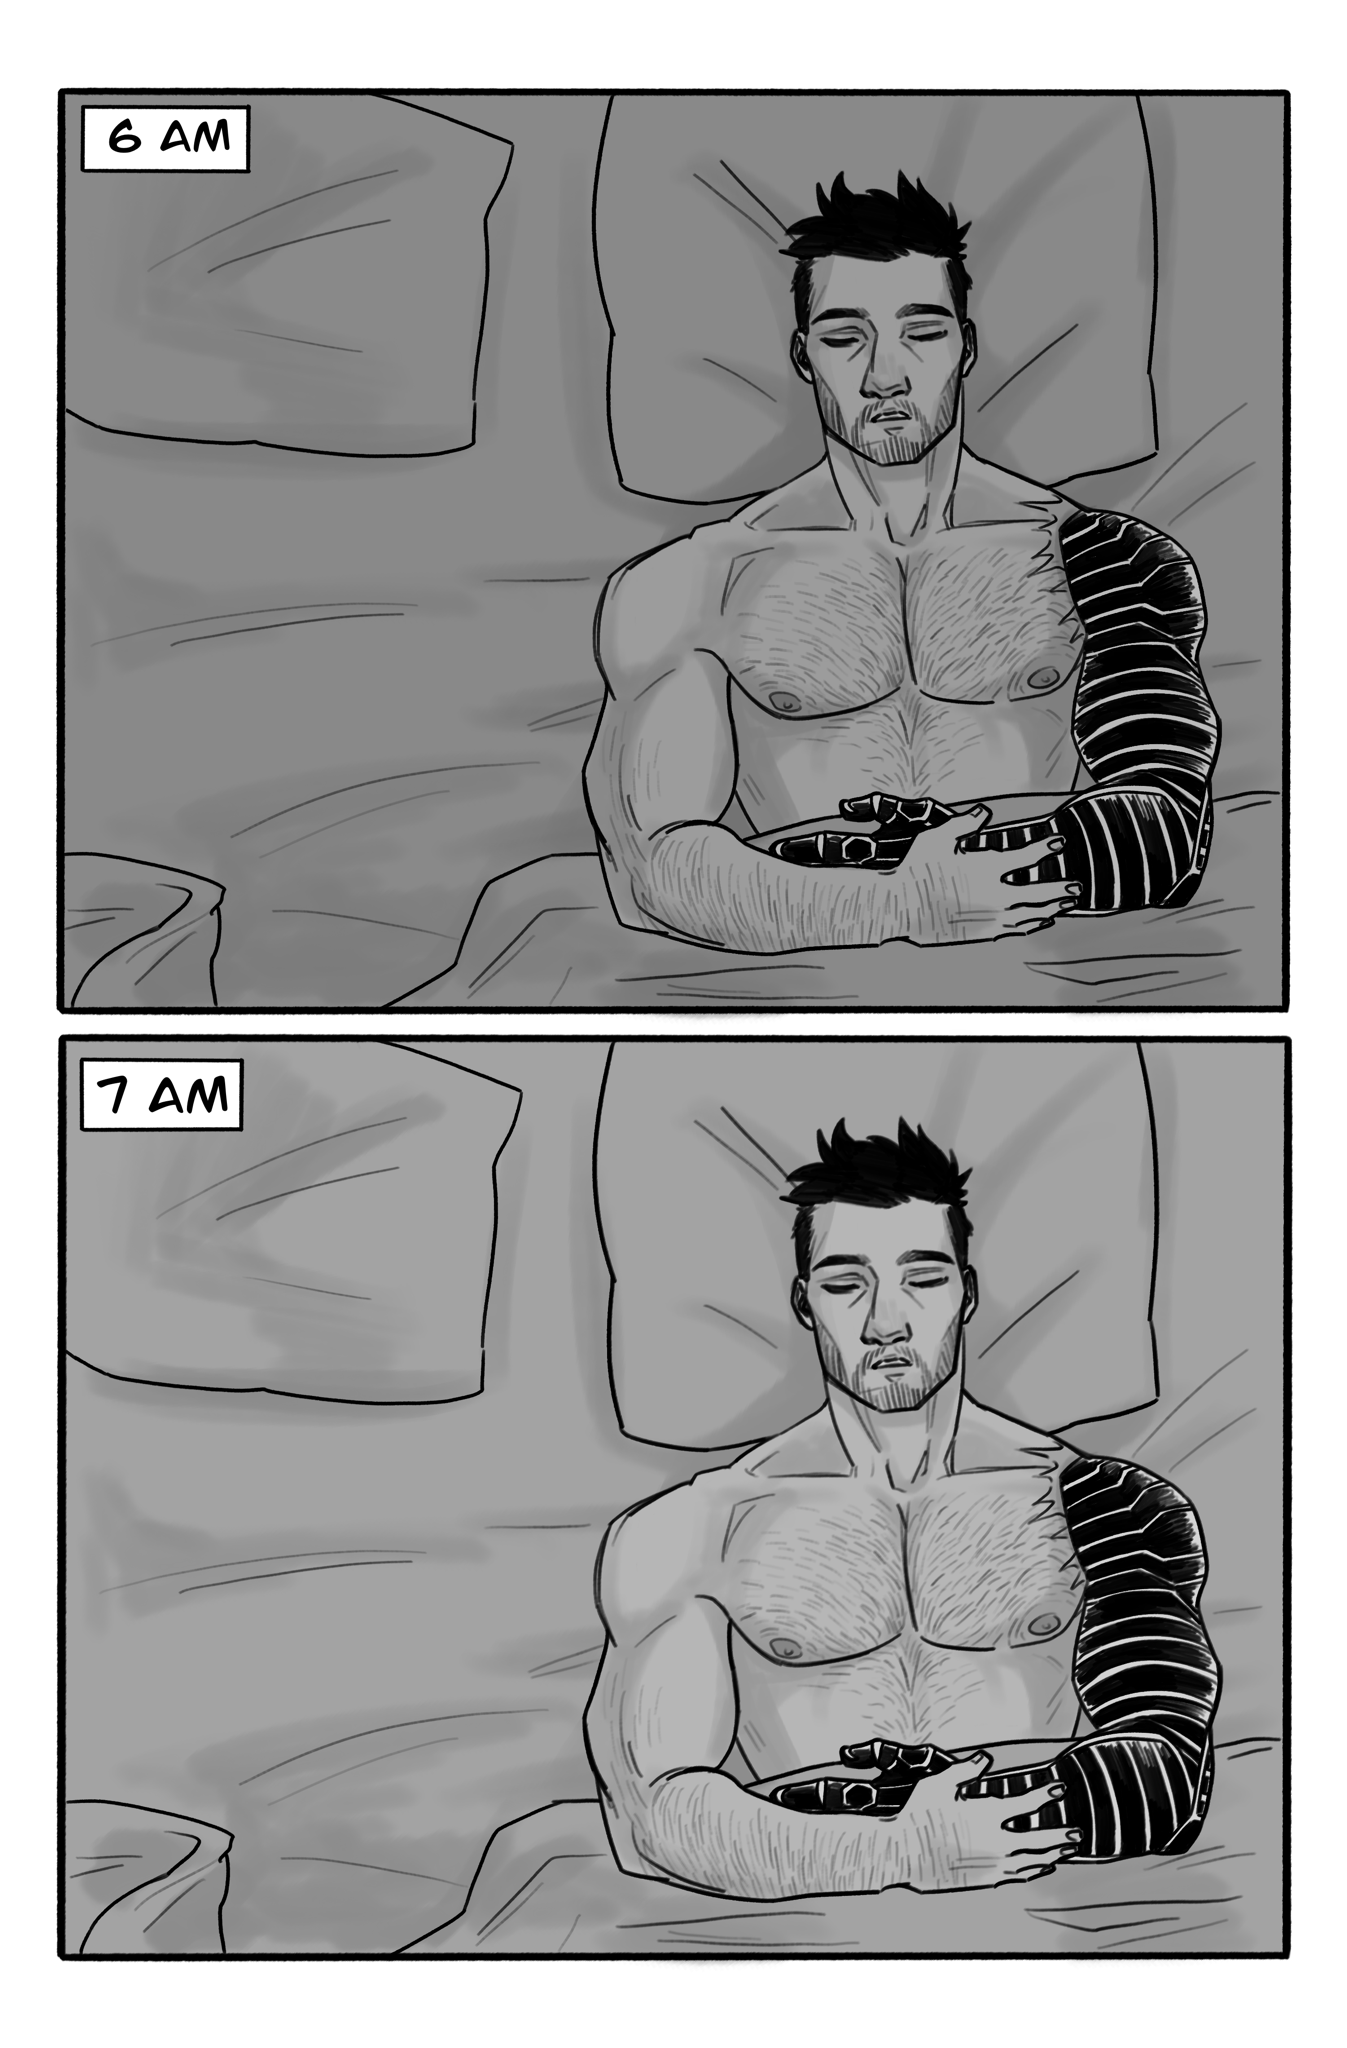 vic-draws-sometimes:Sleeping habits Sam is adult photos